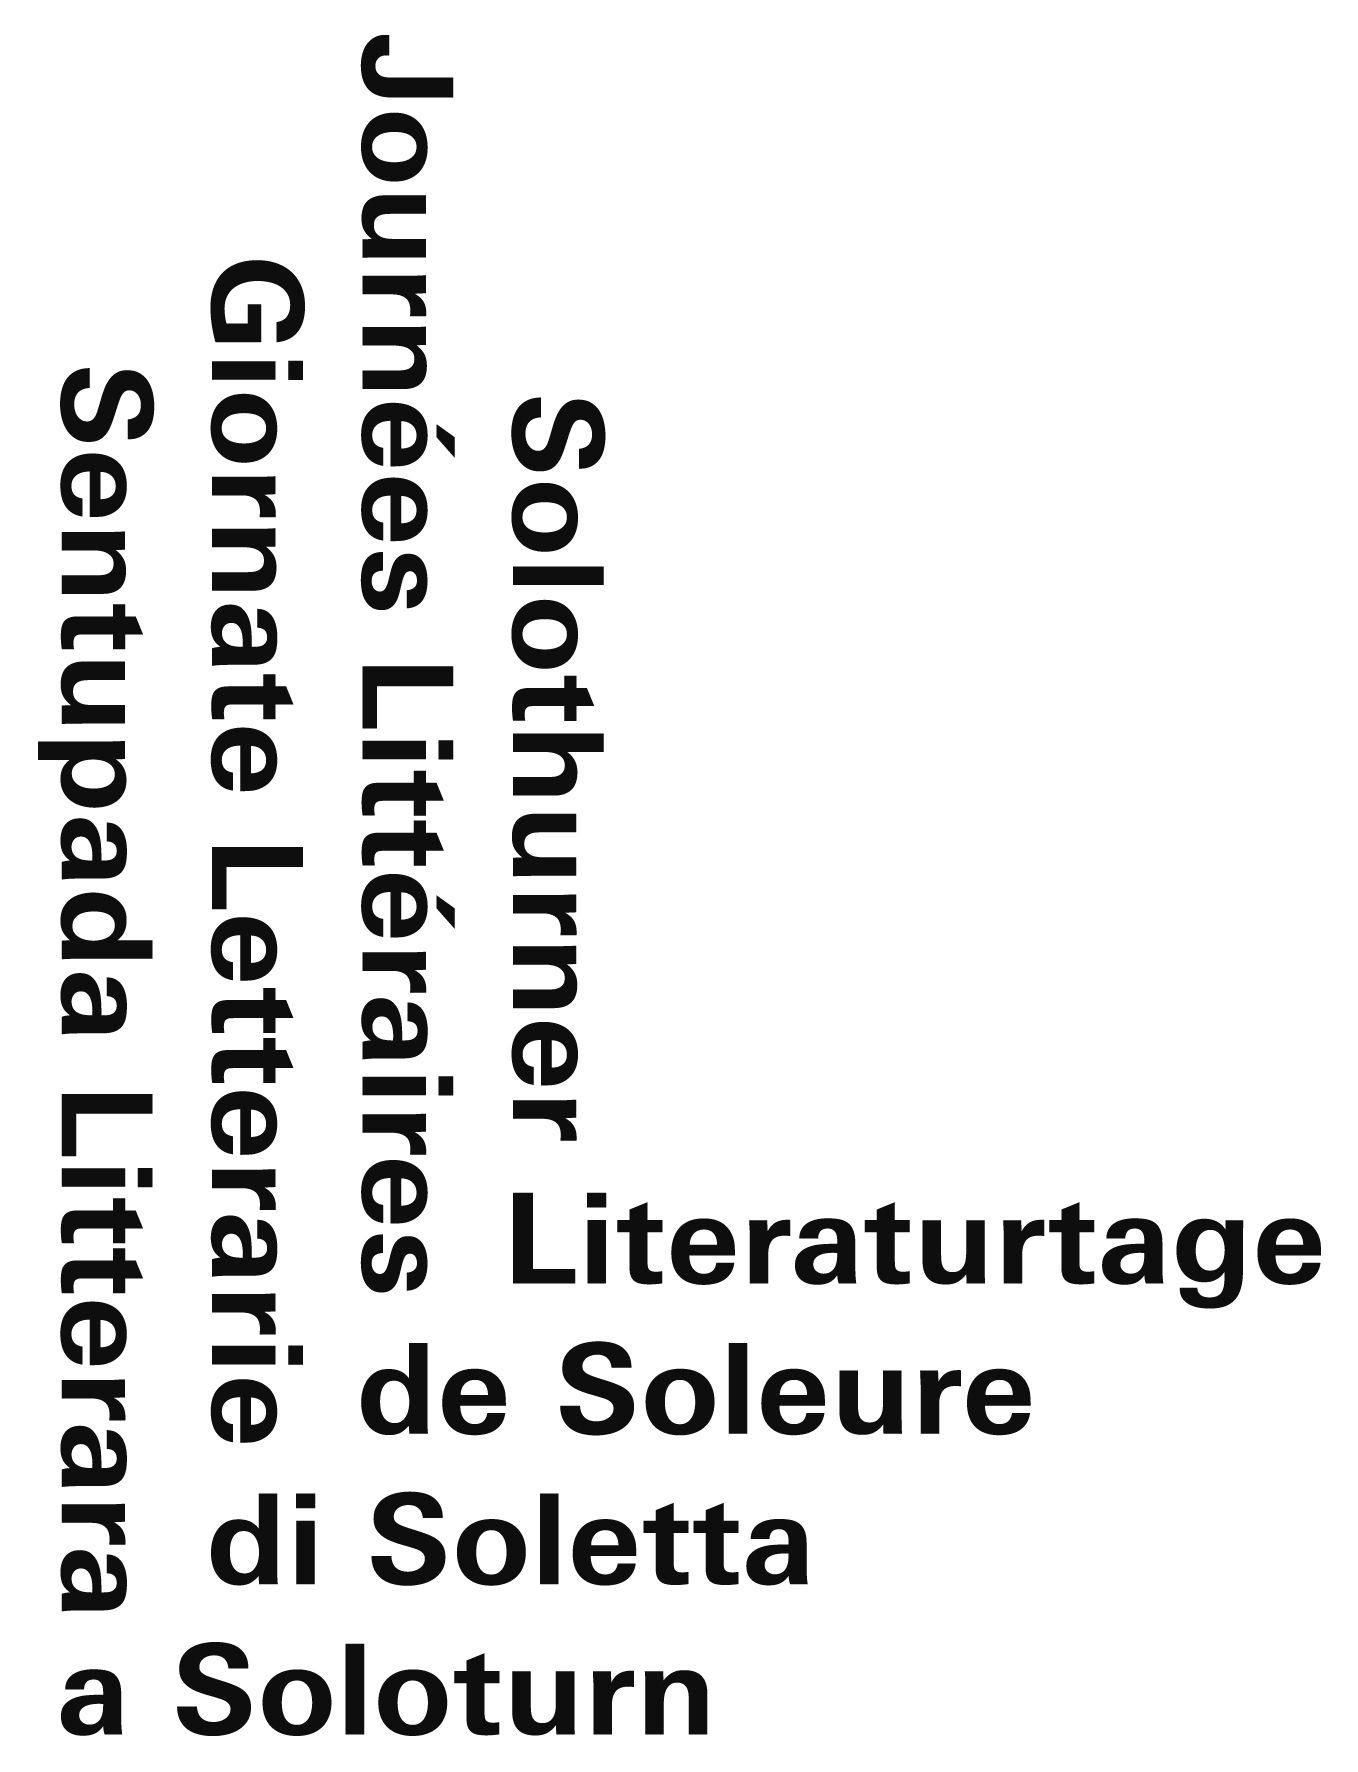 SLT Logo - File:SLT Logo.jpg - Wikimedia Commons